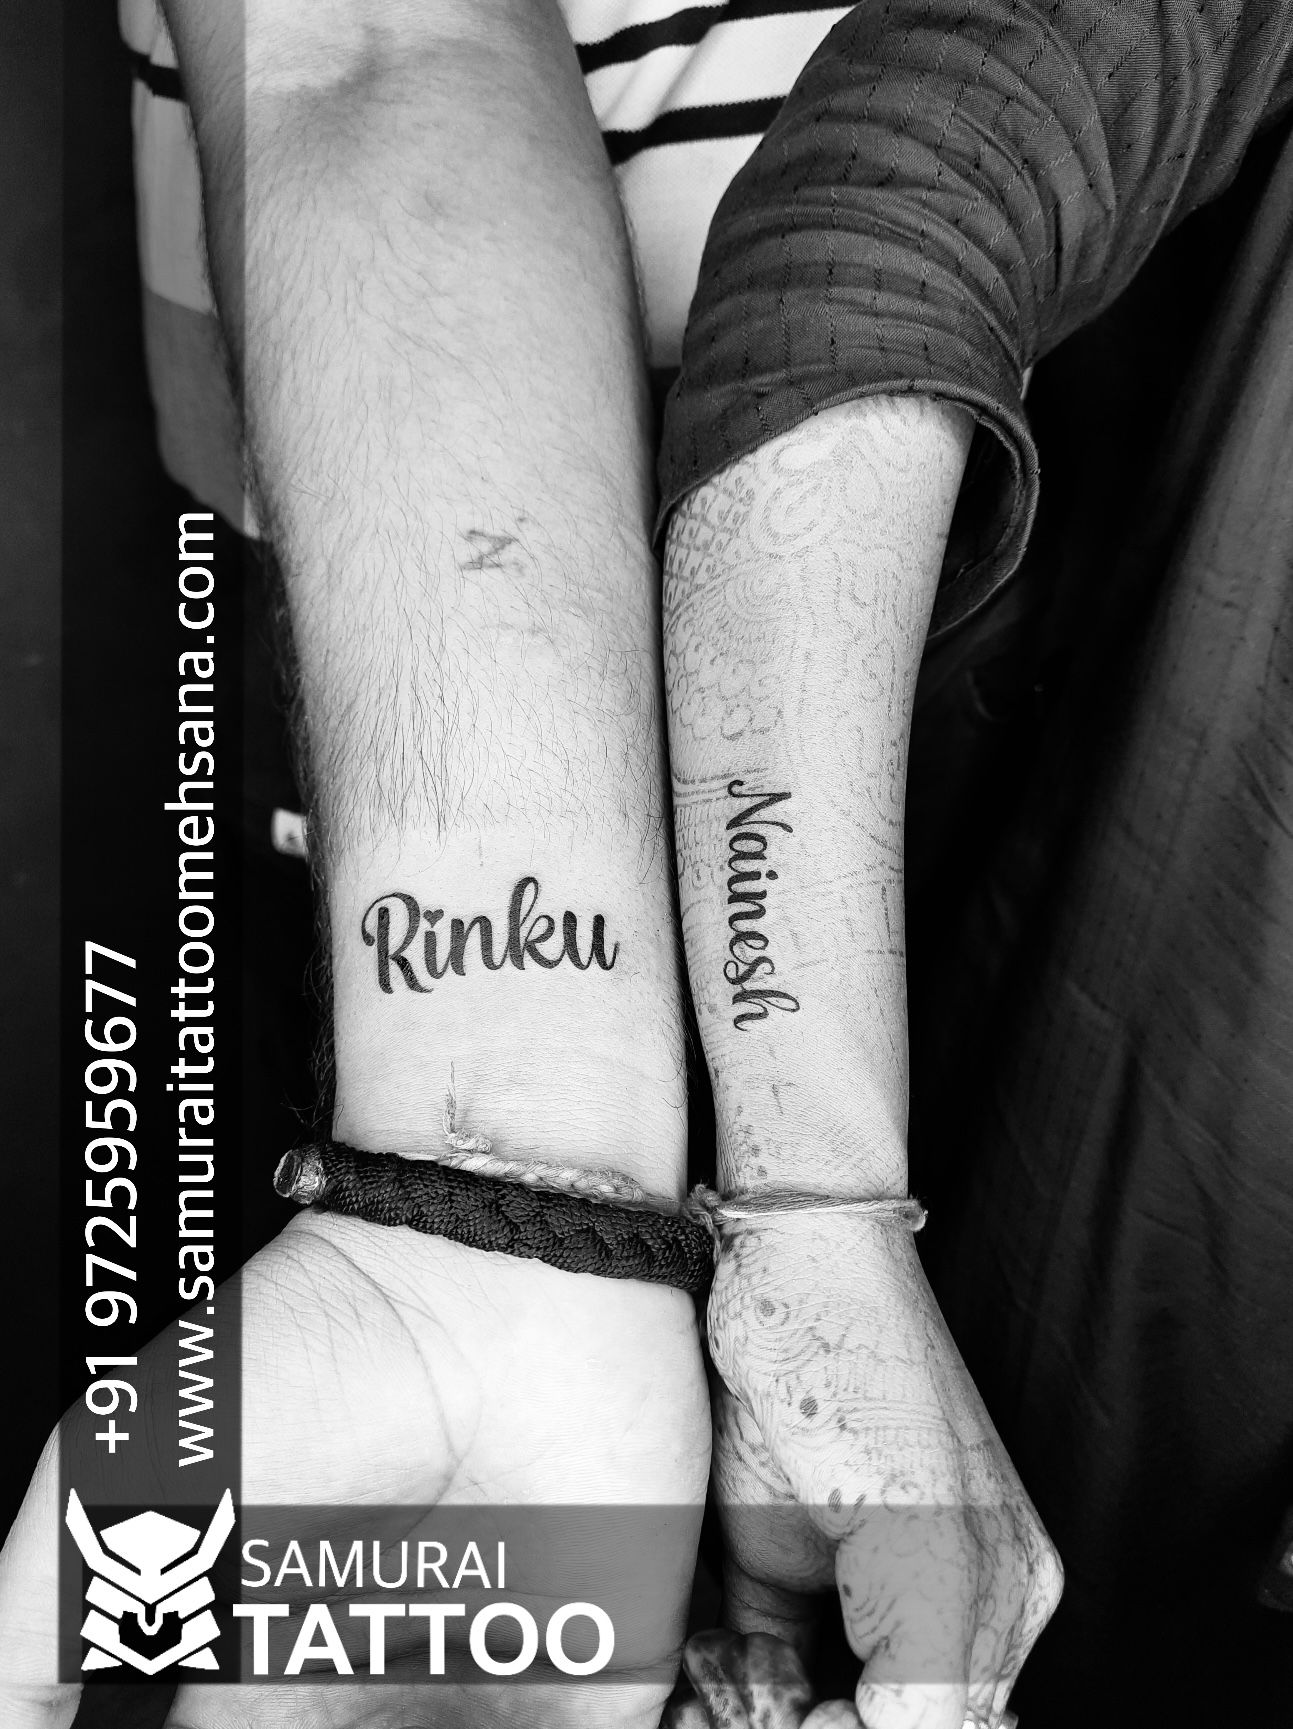 Tattoo uploaded by Vipul Chaudhary  Rinku name tattoo Nainesh name tattoo  Couple tattoo Tattoo for couples  Tattoodo